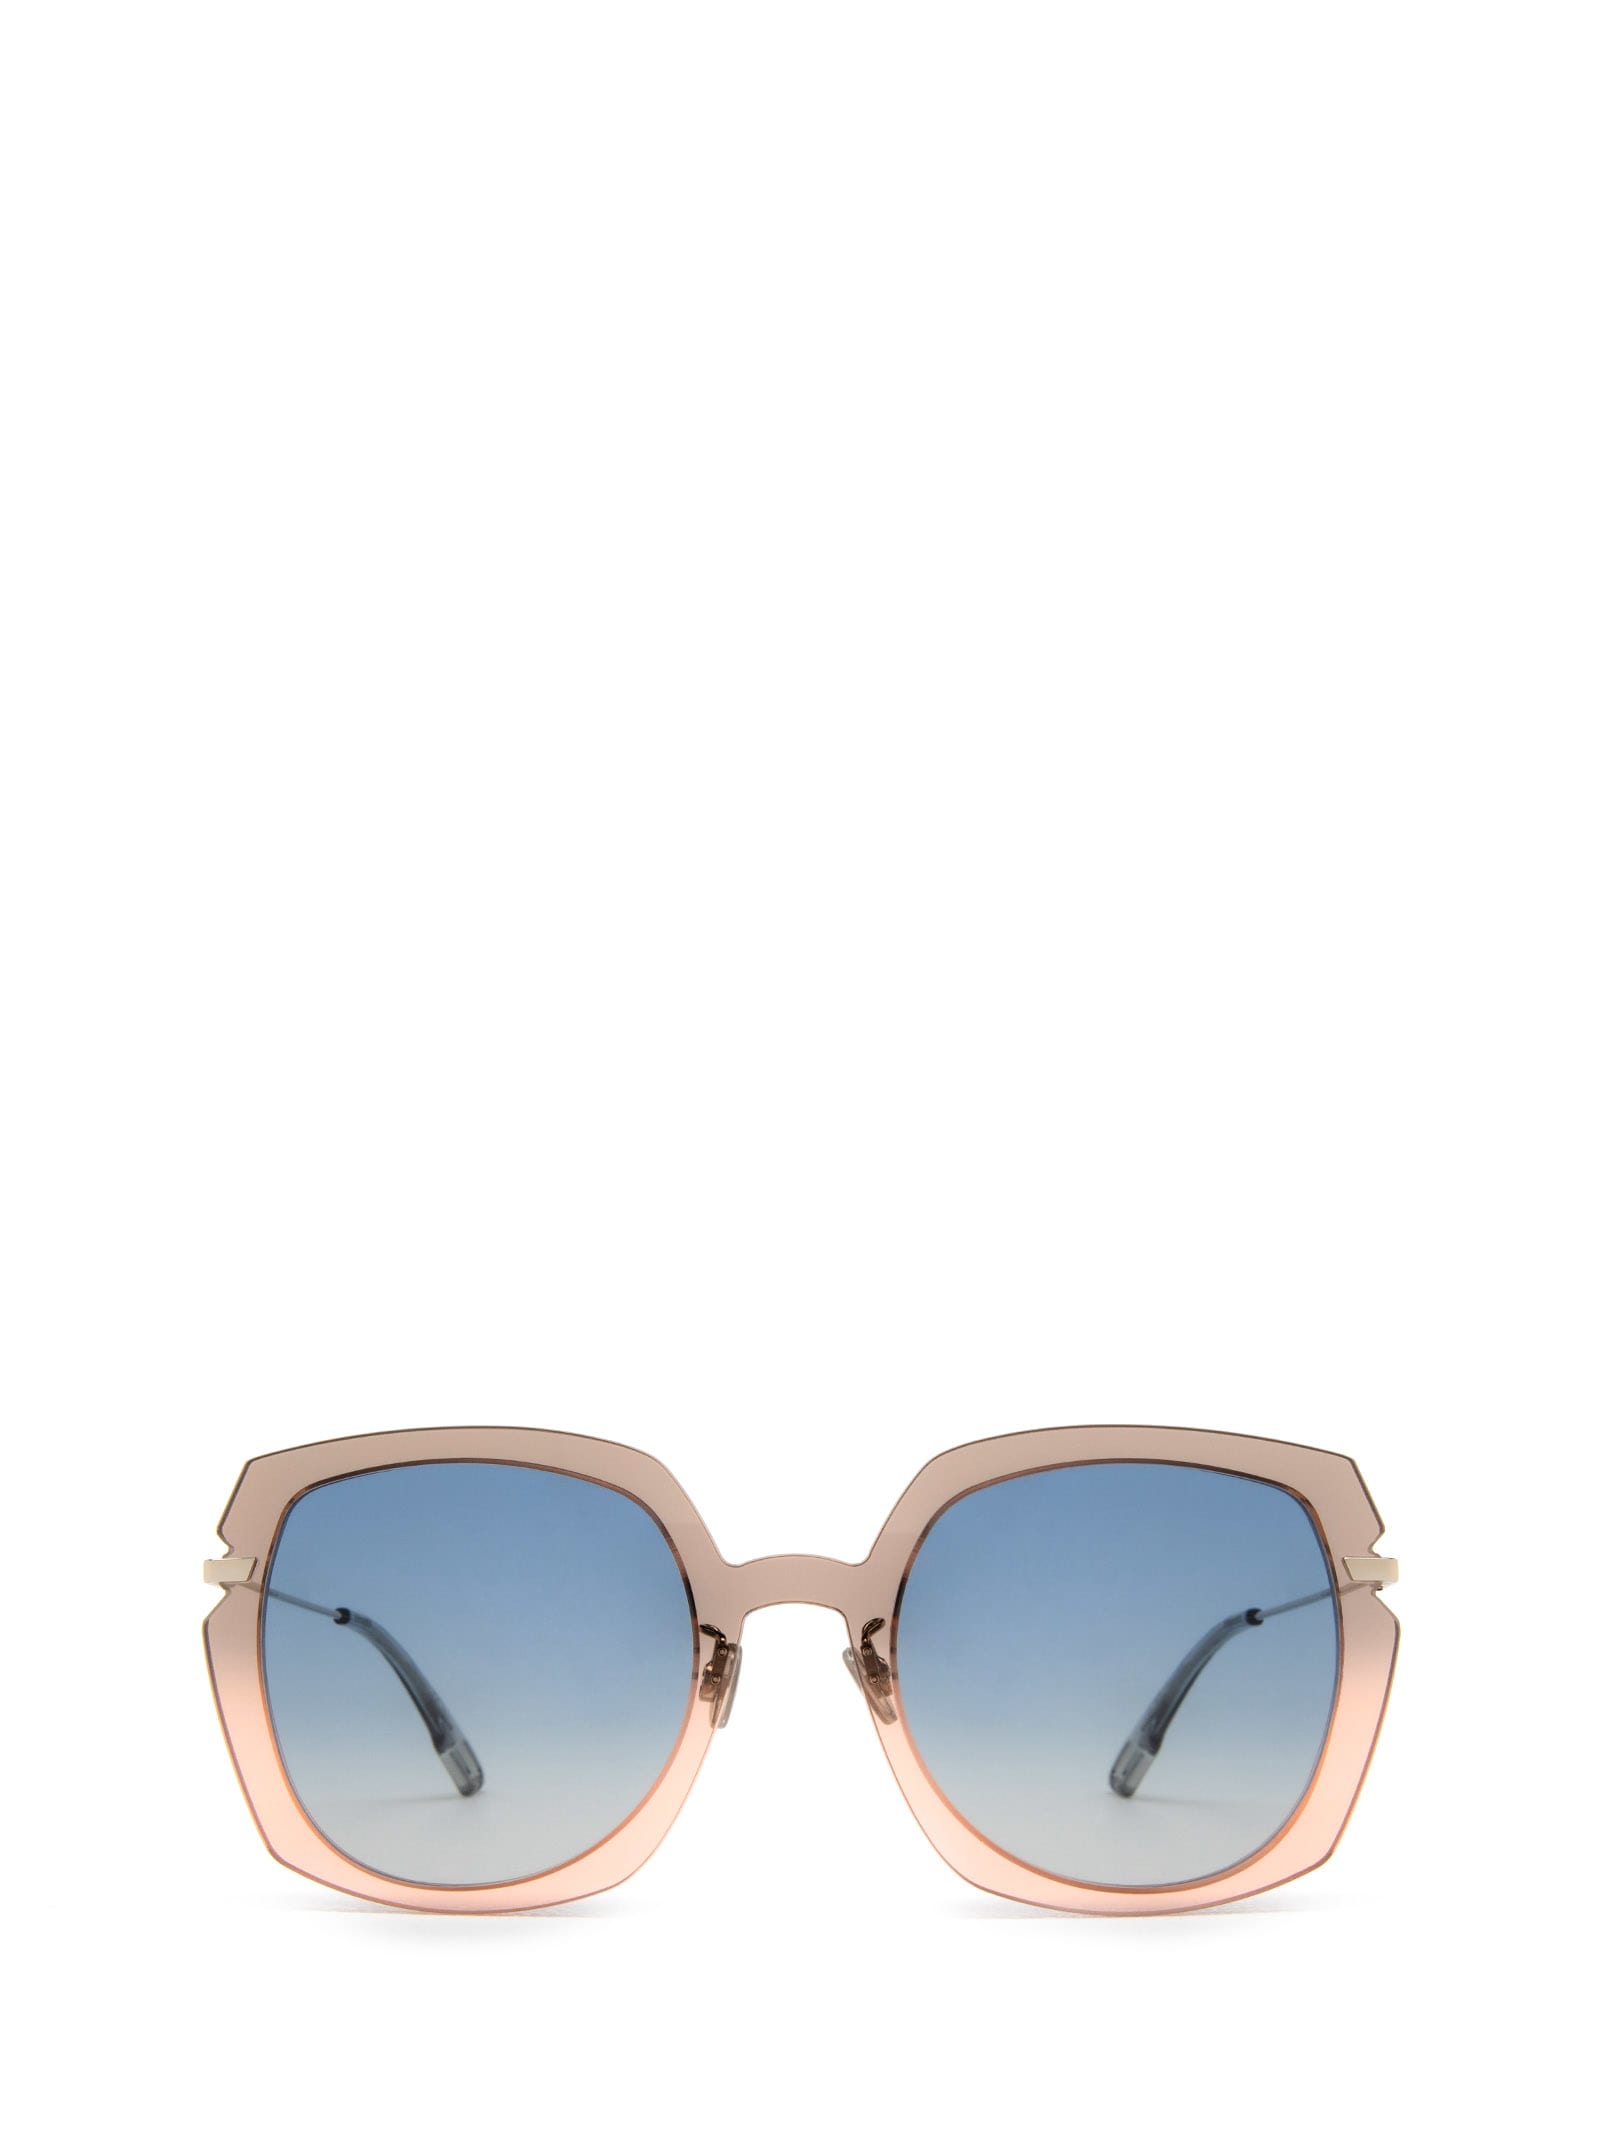 Amazoncom Dior Womens Diorattitude1 56Mm Sunglasses  Clothing Shoes   Jewelry